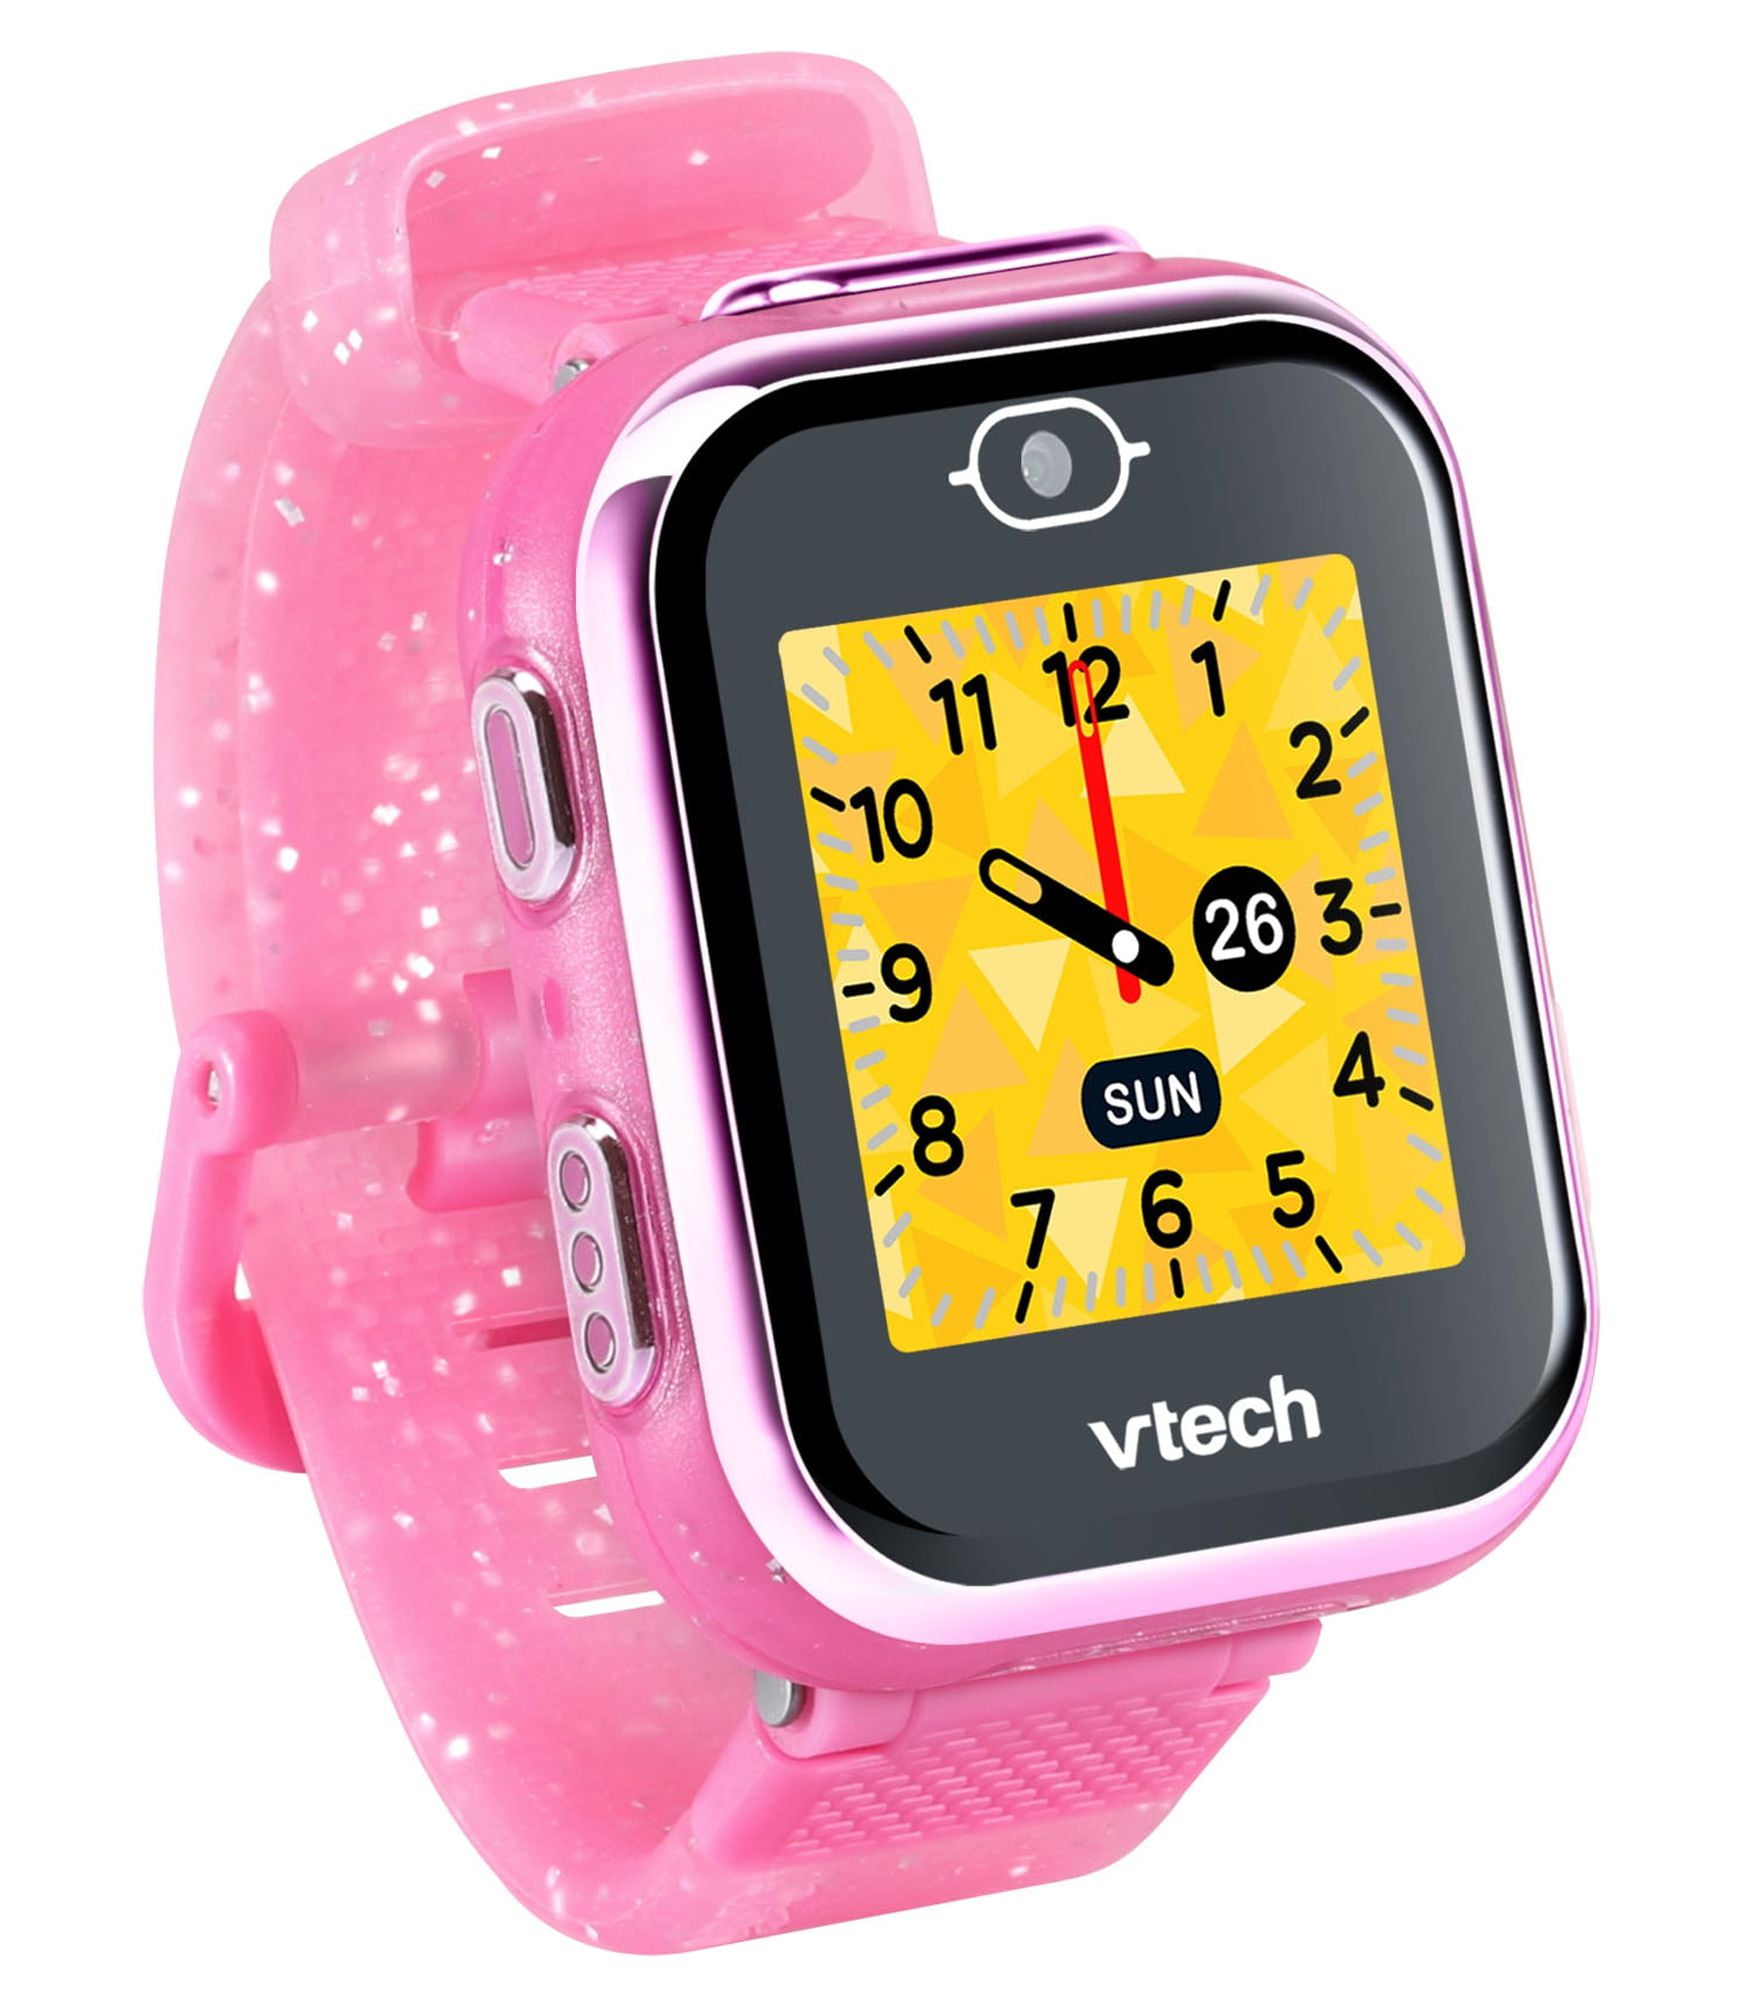 VTech® KidiZoom® Smartwatch DX3 Award-Winning Watch, Pink, Walmart  Exclusive 